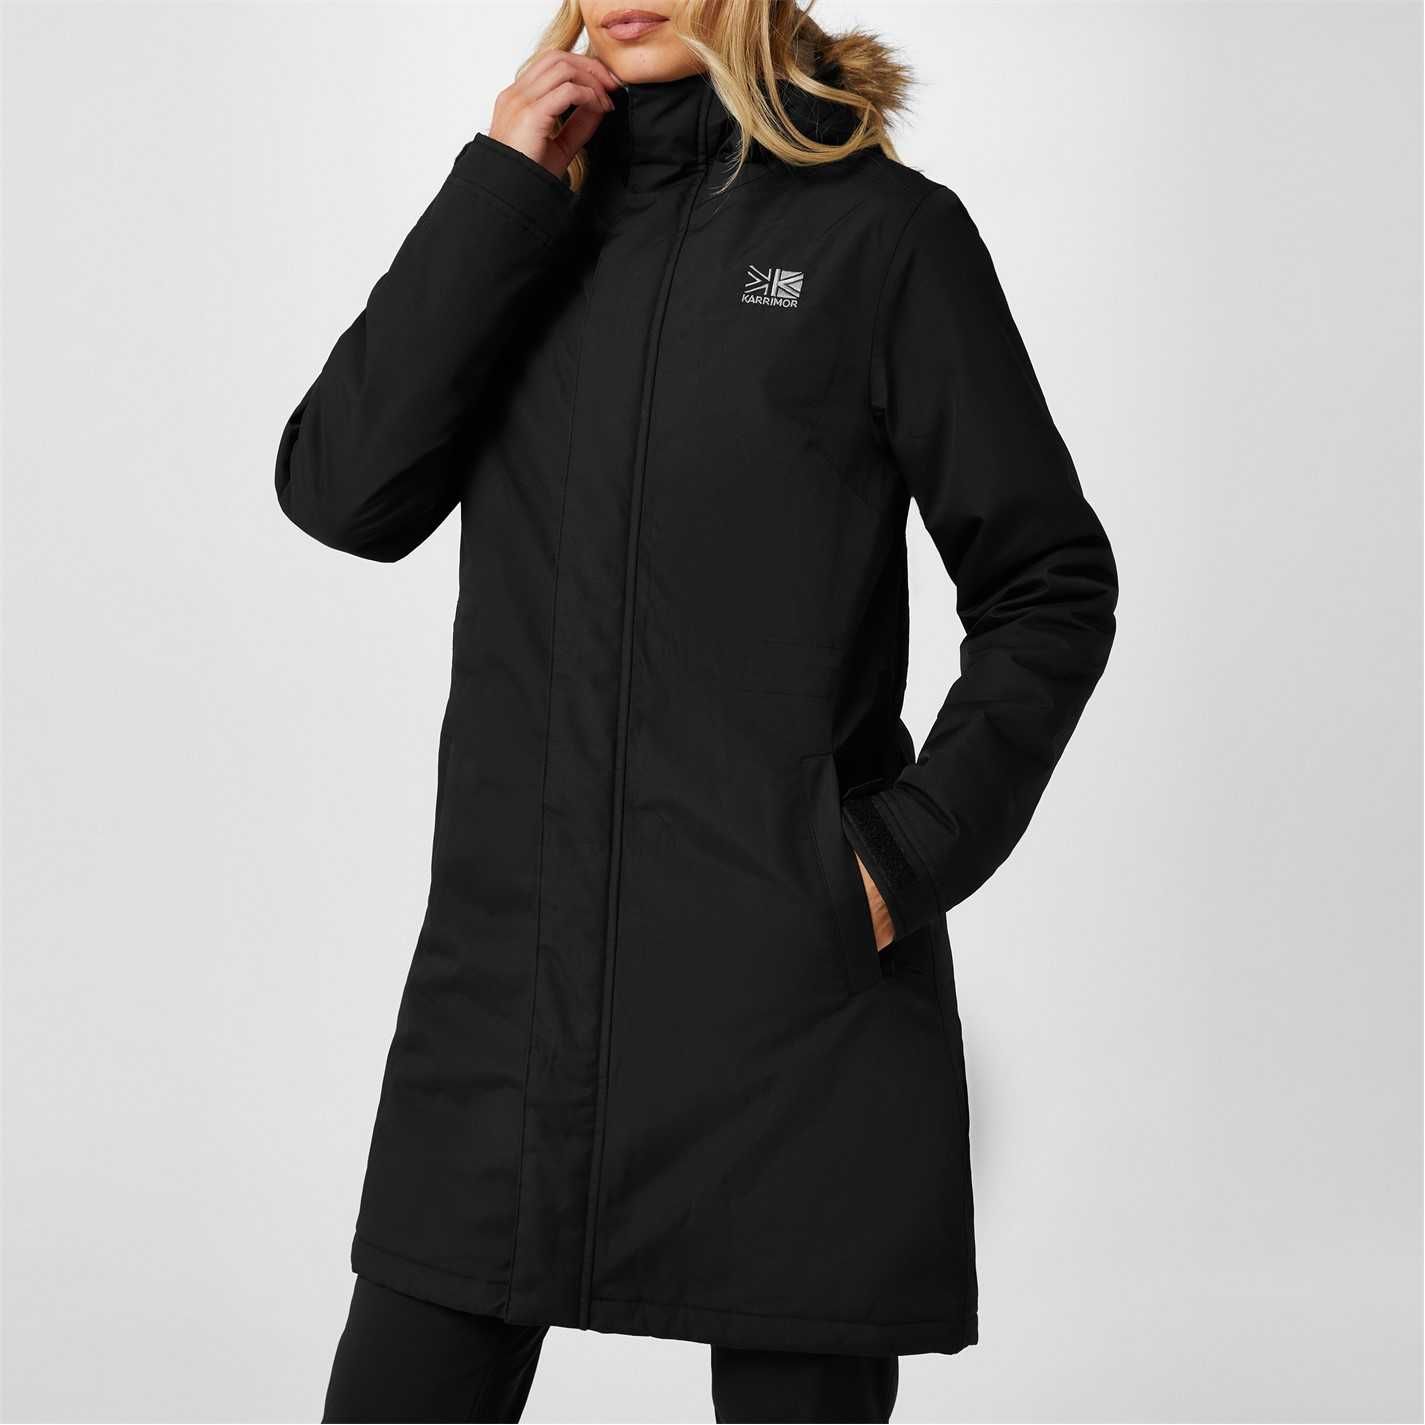 Женская куртка пальто парка Karrimor Parka Jacket Ladies